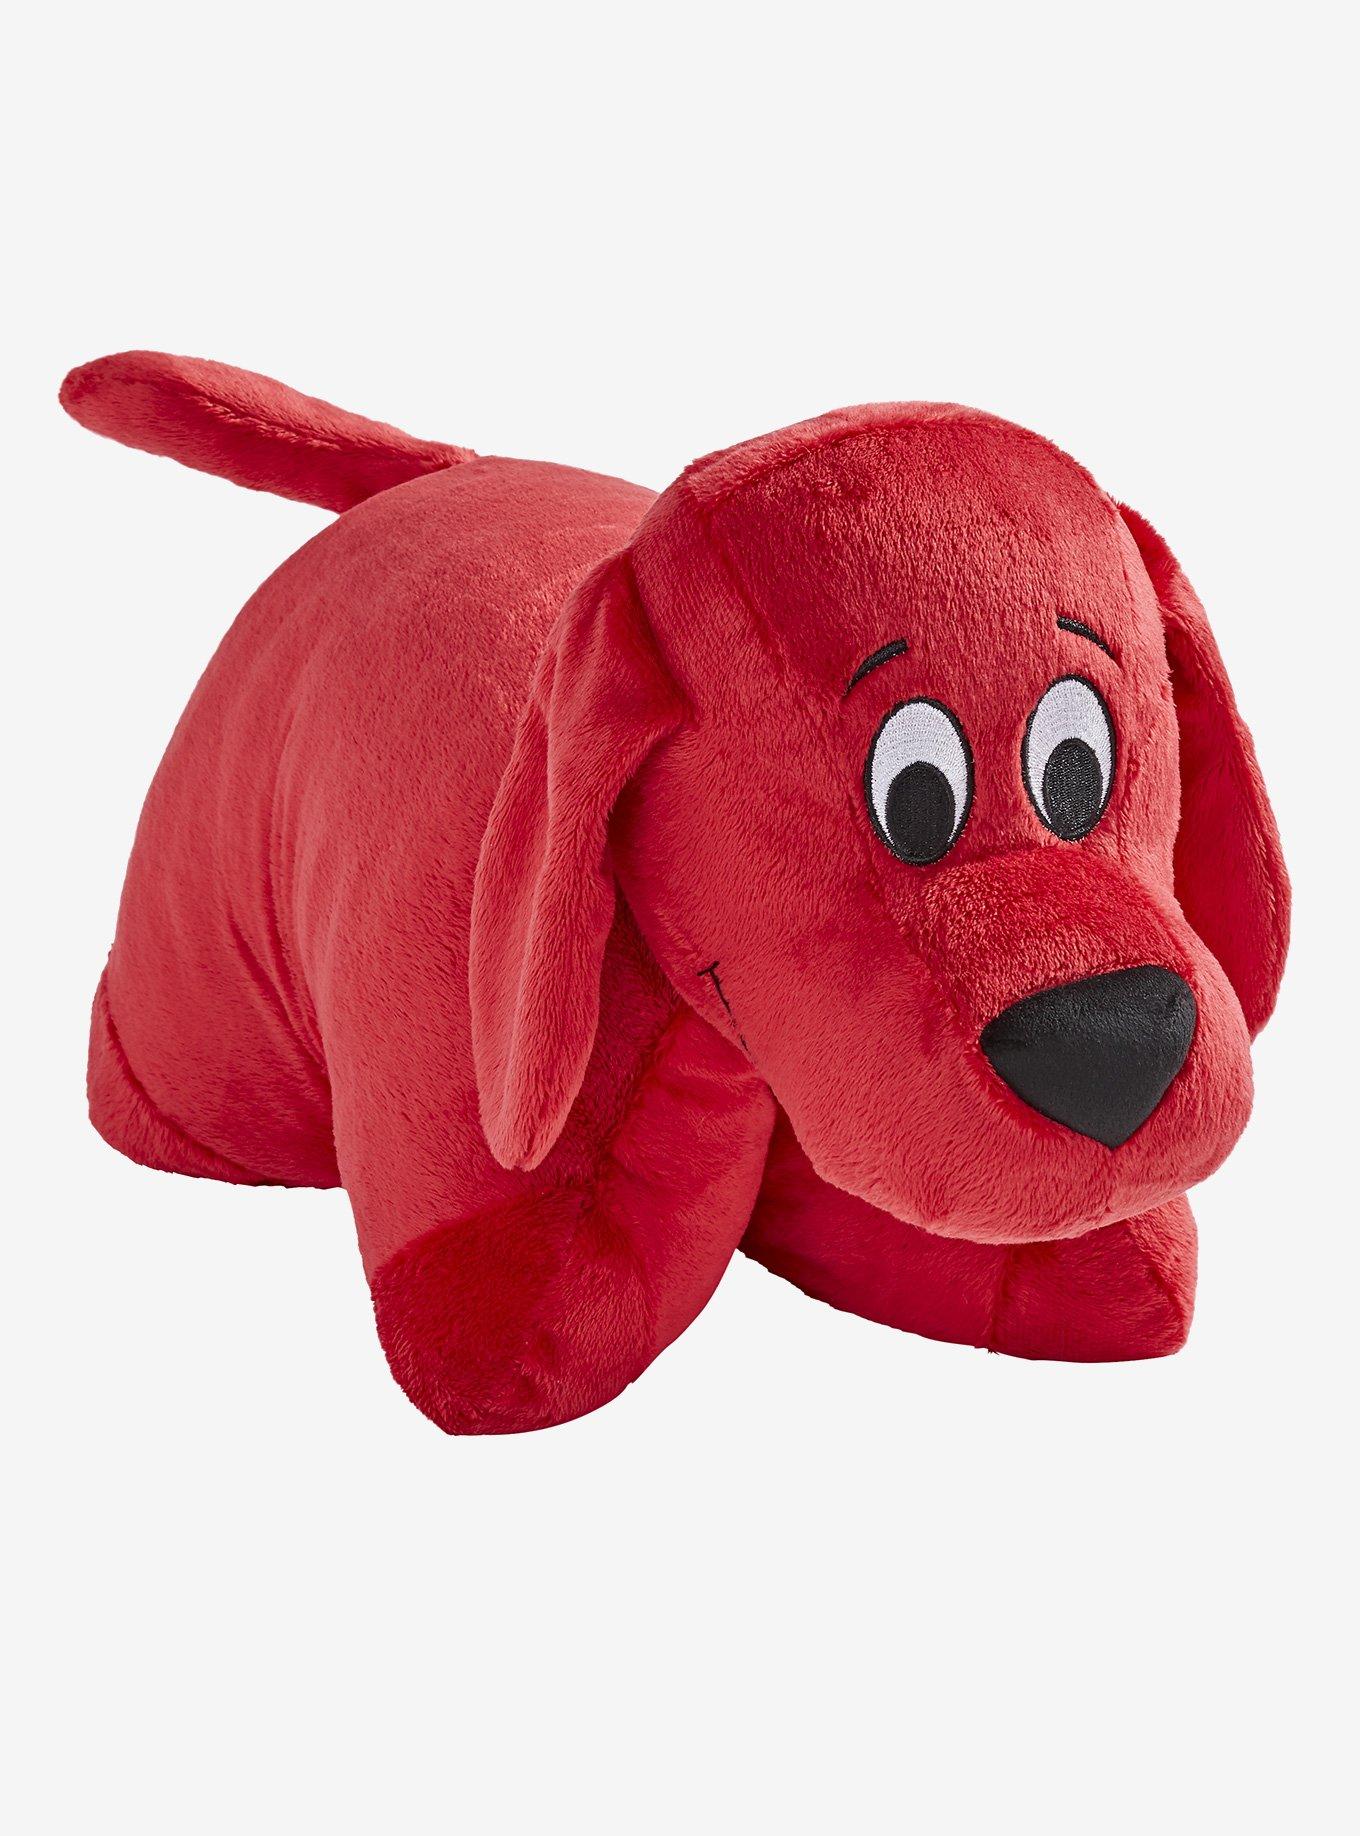 Clifford The Big Red Dog Jumboz Pillow Pets Plush Toy